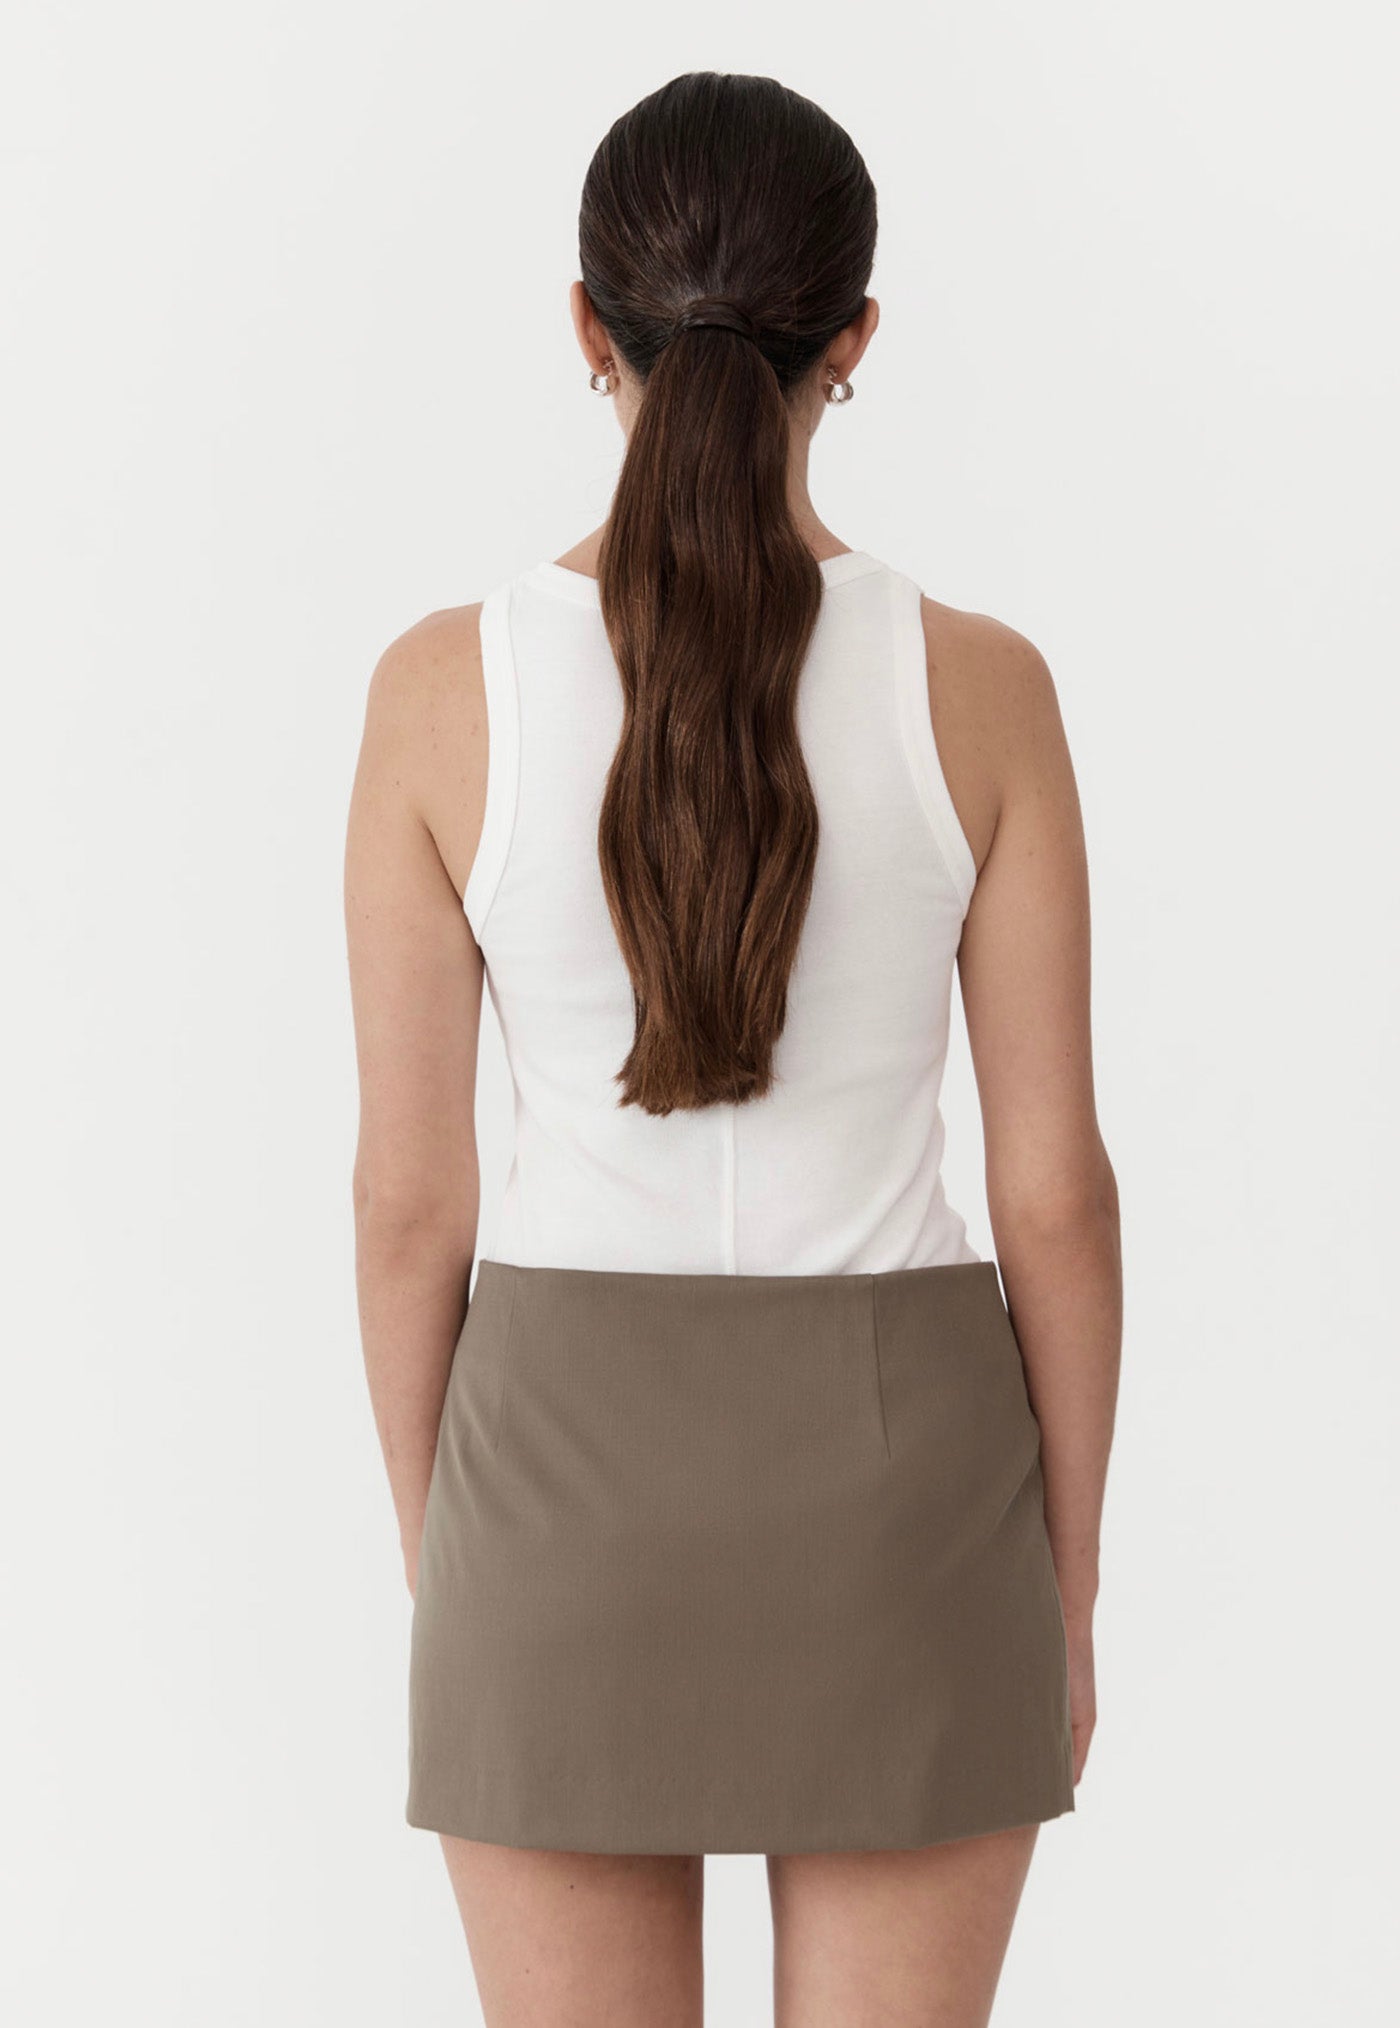 The St Agni Utilitarian Pocket Mini Skirt in Kelp available at The New Trend Australia